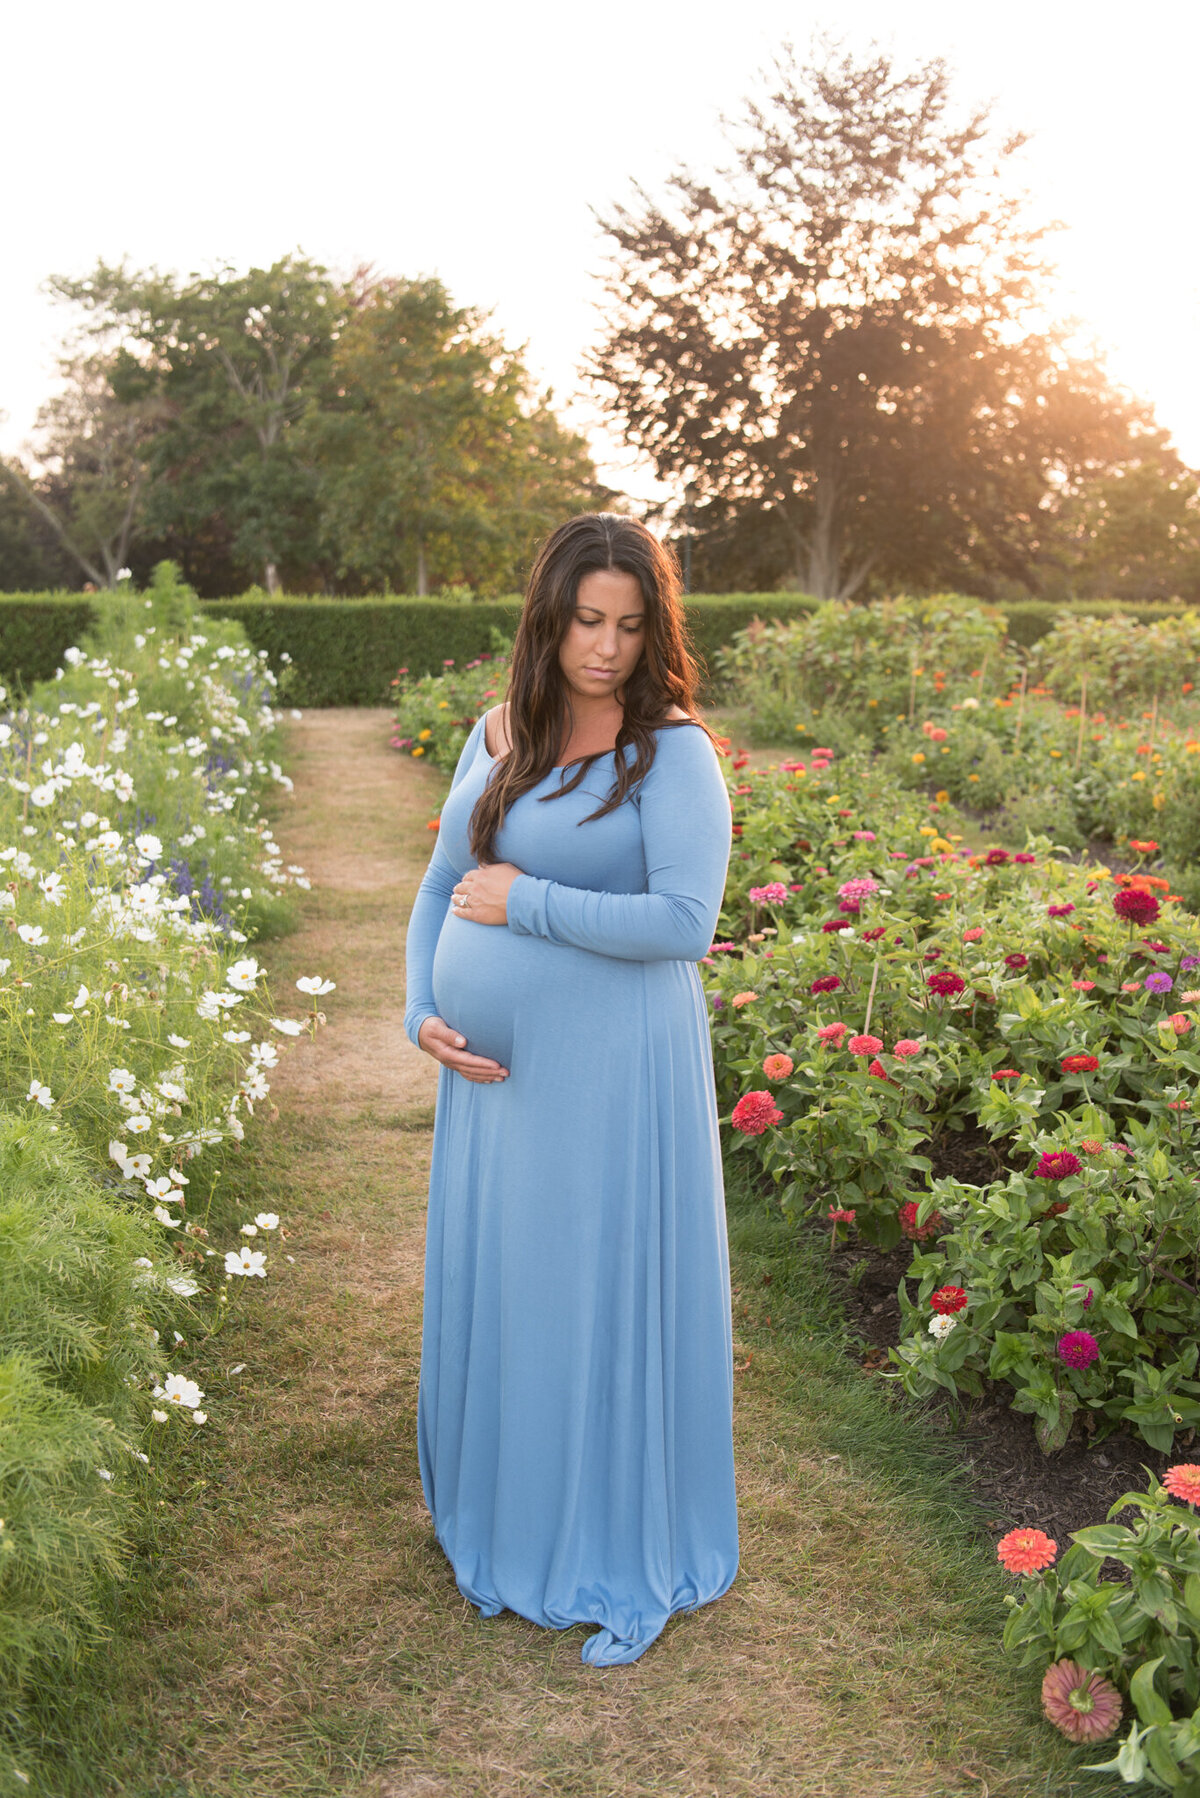 Pregnant mother in blue dress in garden